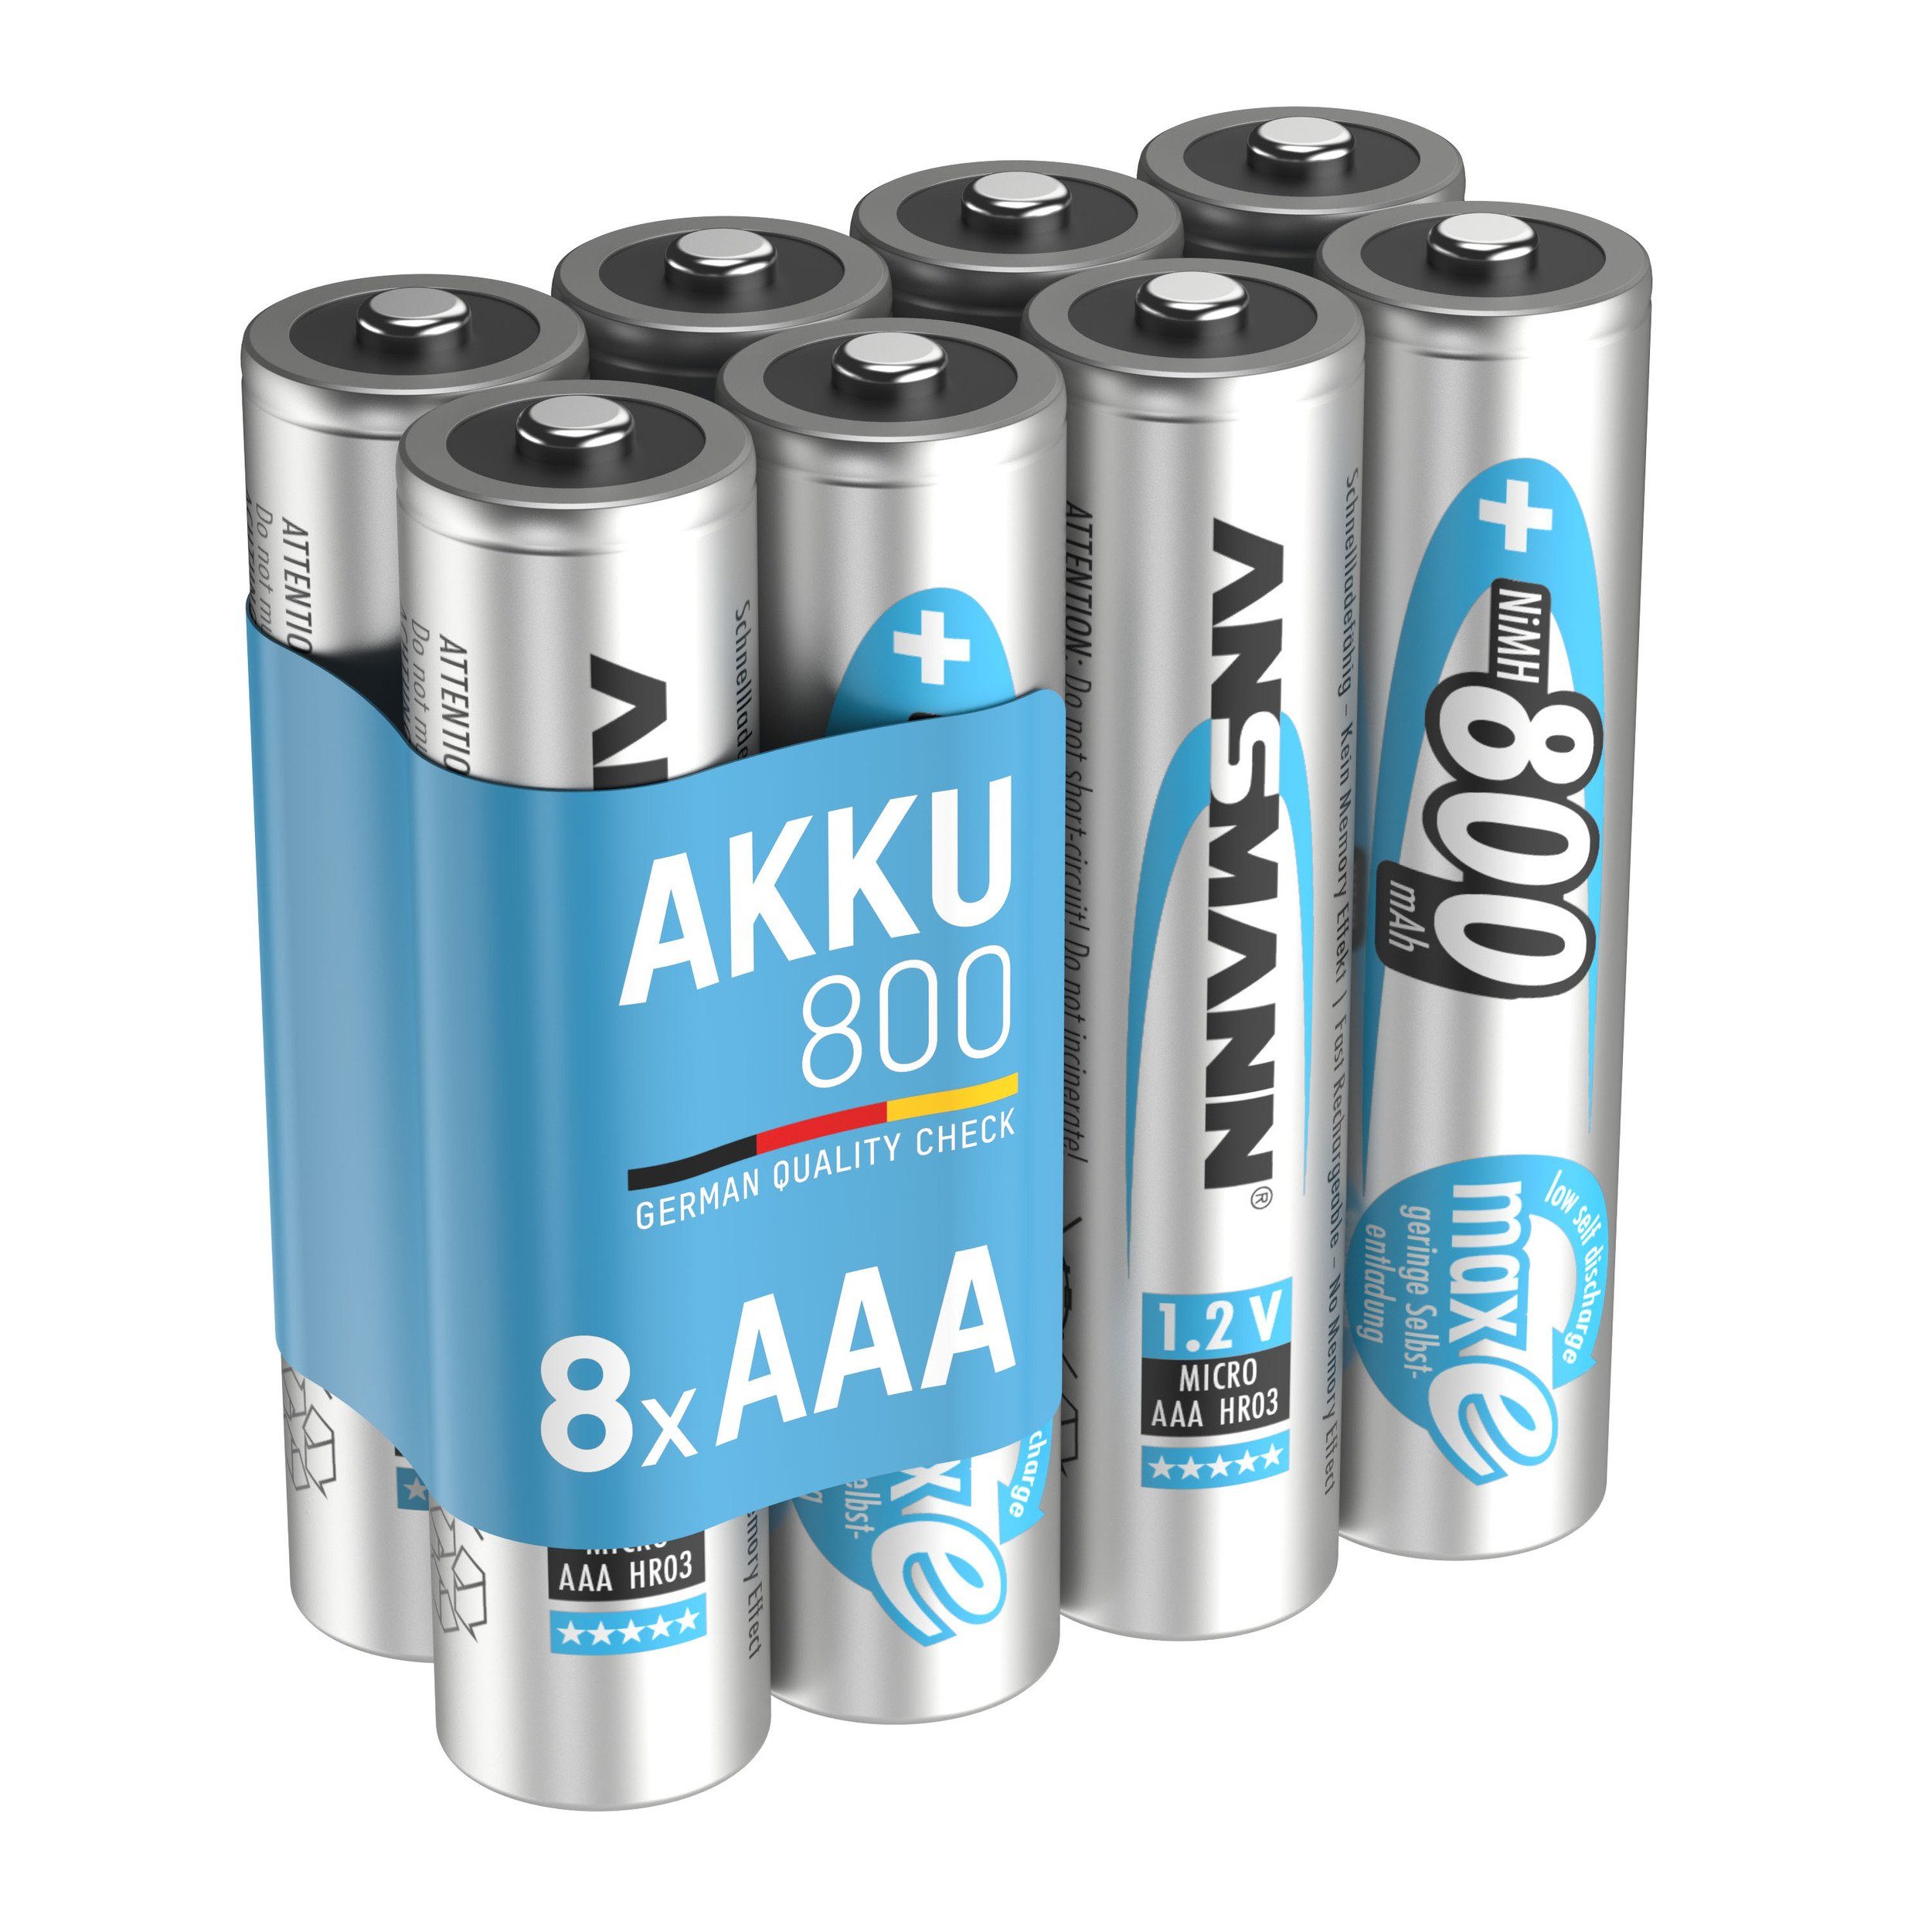 ANSMANN® Akku AAA 800mAh Micro NiMH 1,2V – 1000x wiederaufladbar (8 Stück) Akku 800 mAh (1.2 V) | Akkus und PowerBanks